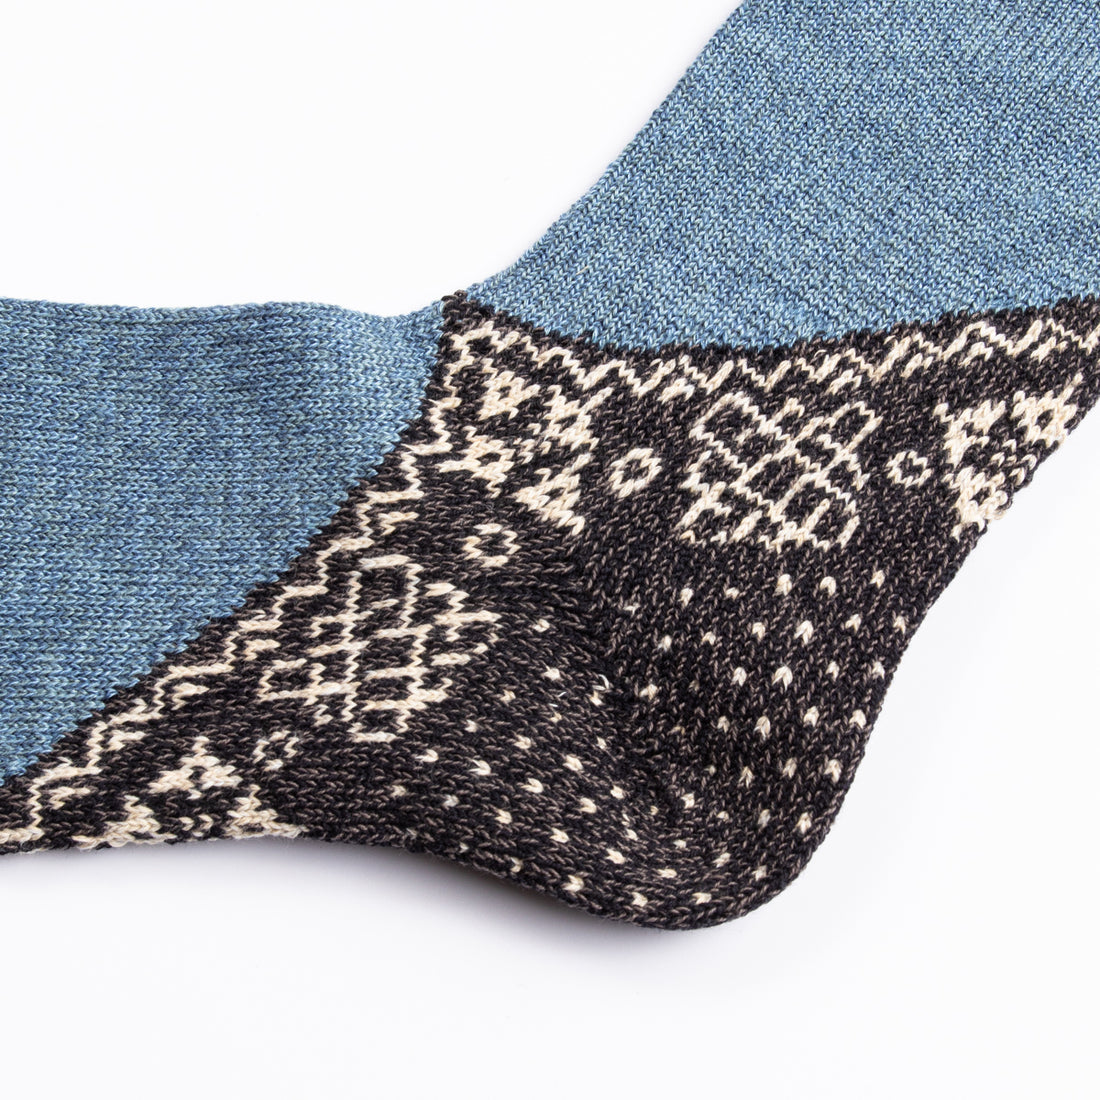 Kapital 96 Yarns Wool Heel Bandana Socks - Black - Standard & Strange